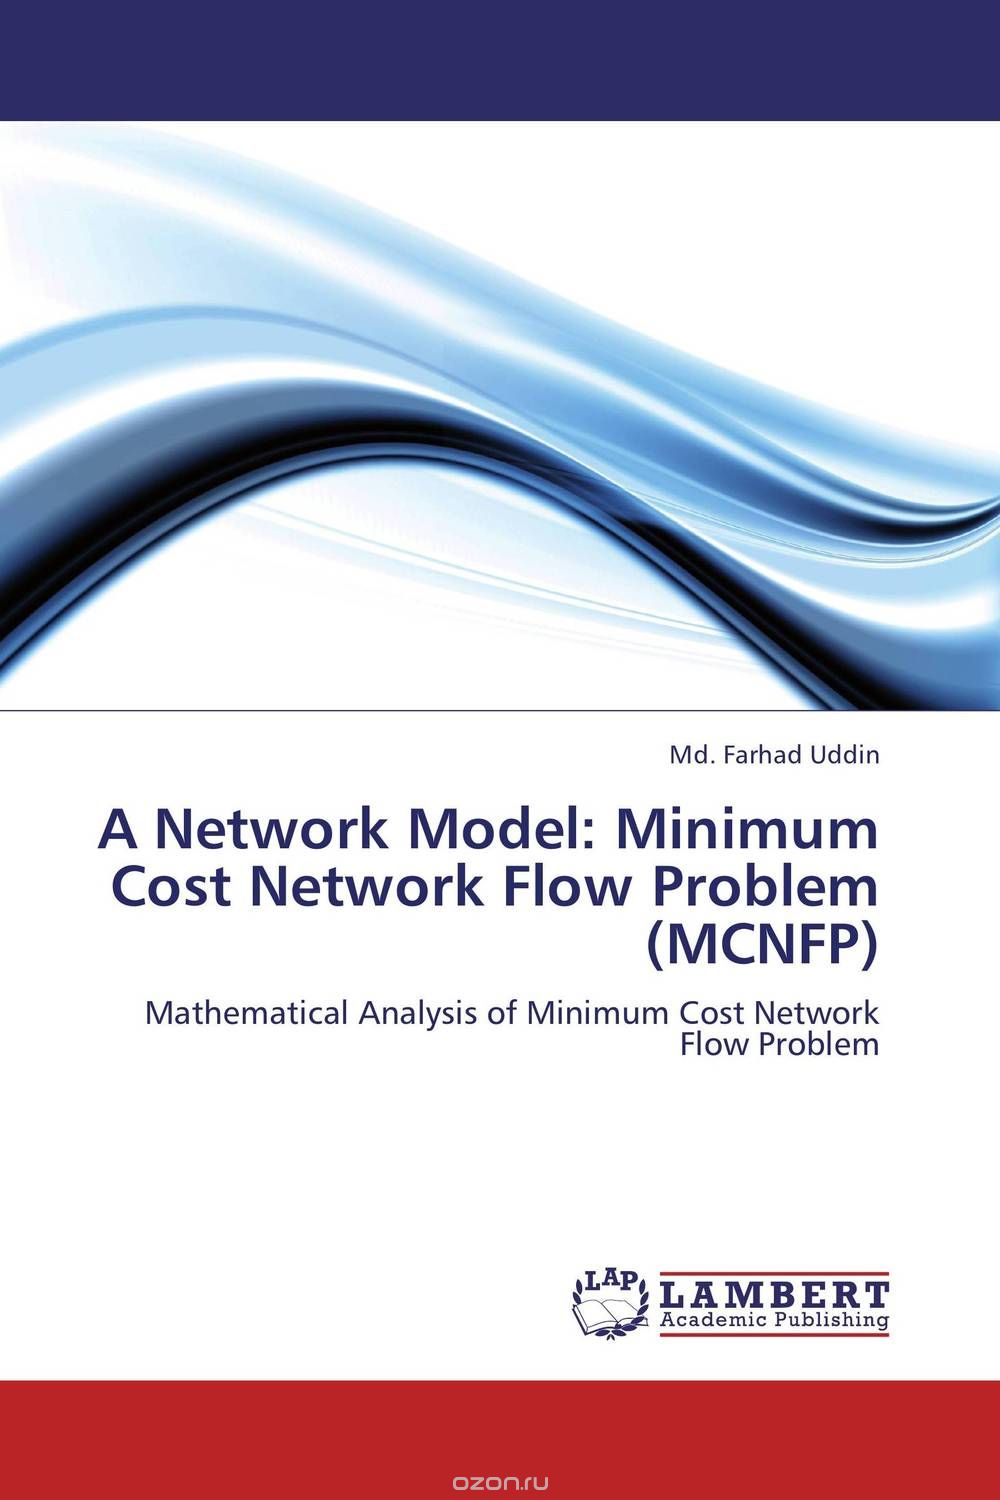 Скачать книгу "A Network Model: Minimum Cost Network Flow Problem (MCNFP)"